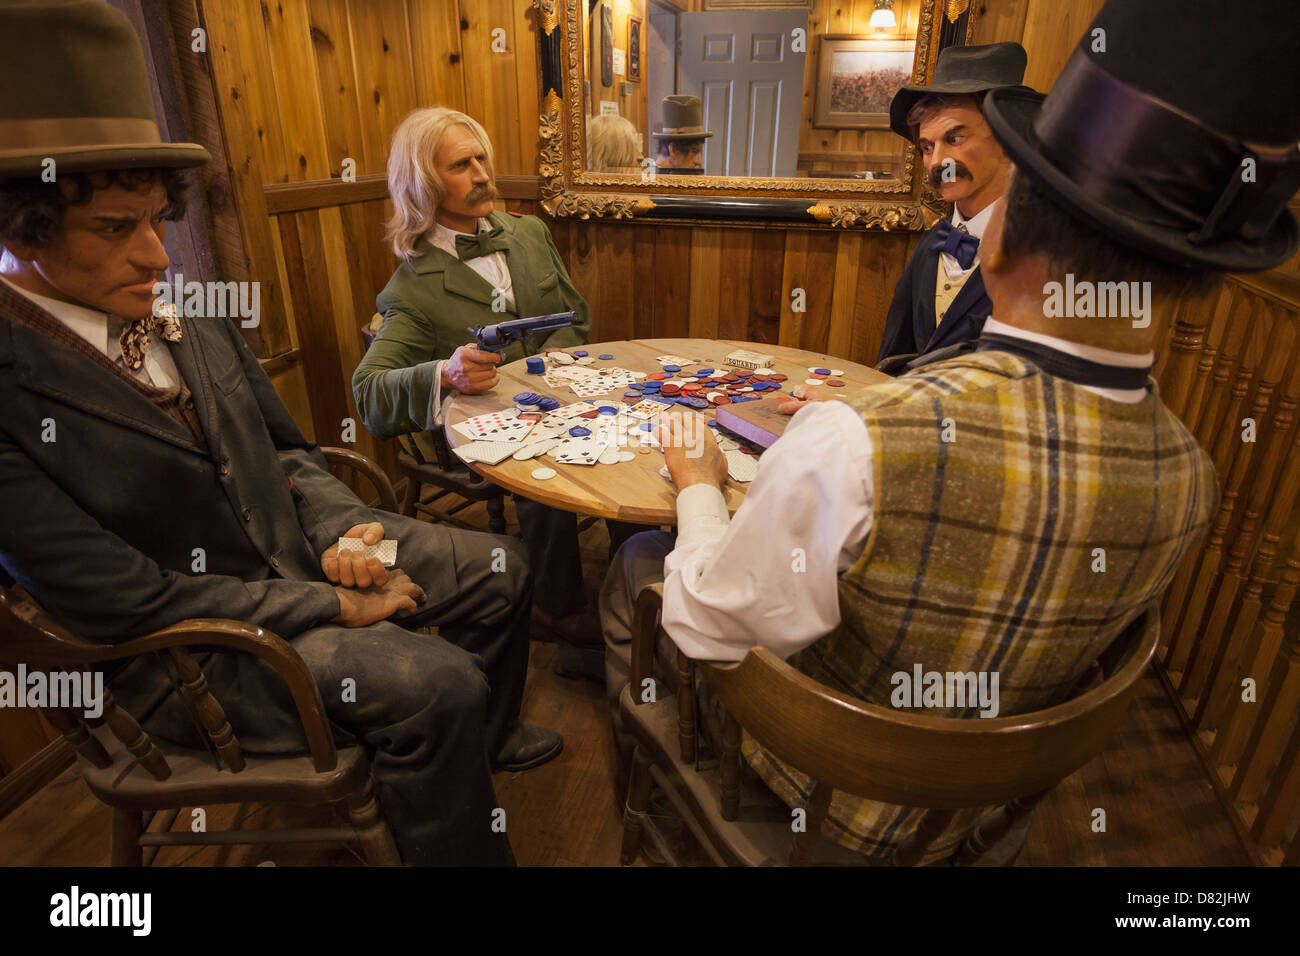 Western figures play poker inside Wall Drug store in Wall, South Dakota Stock Photo